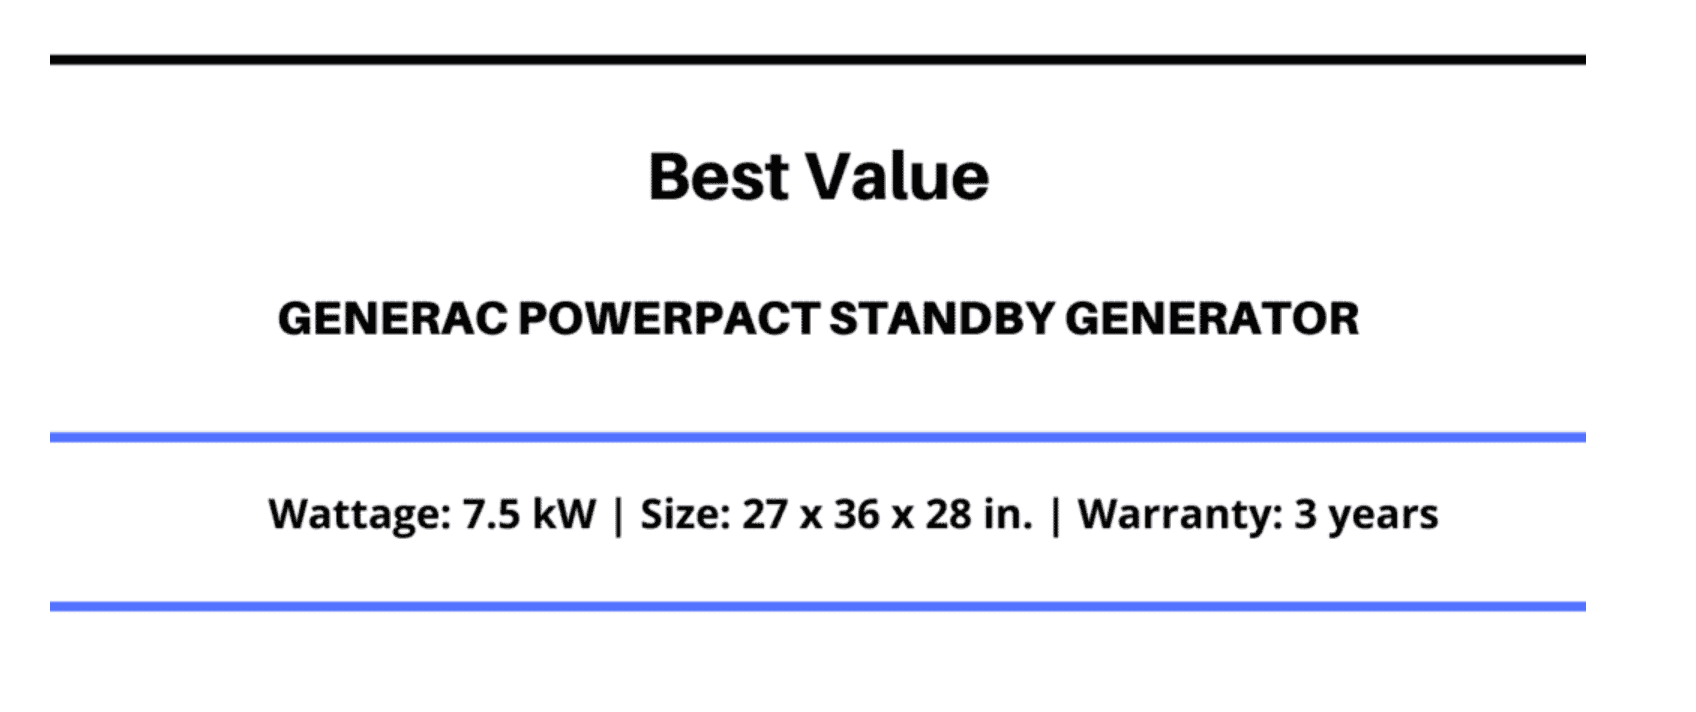 Best Value Home Generator